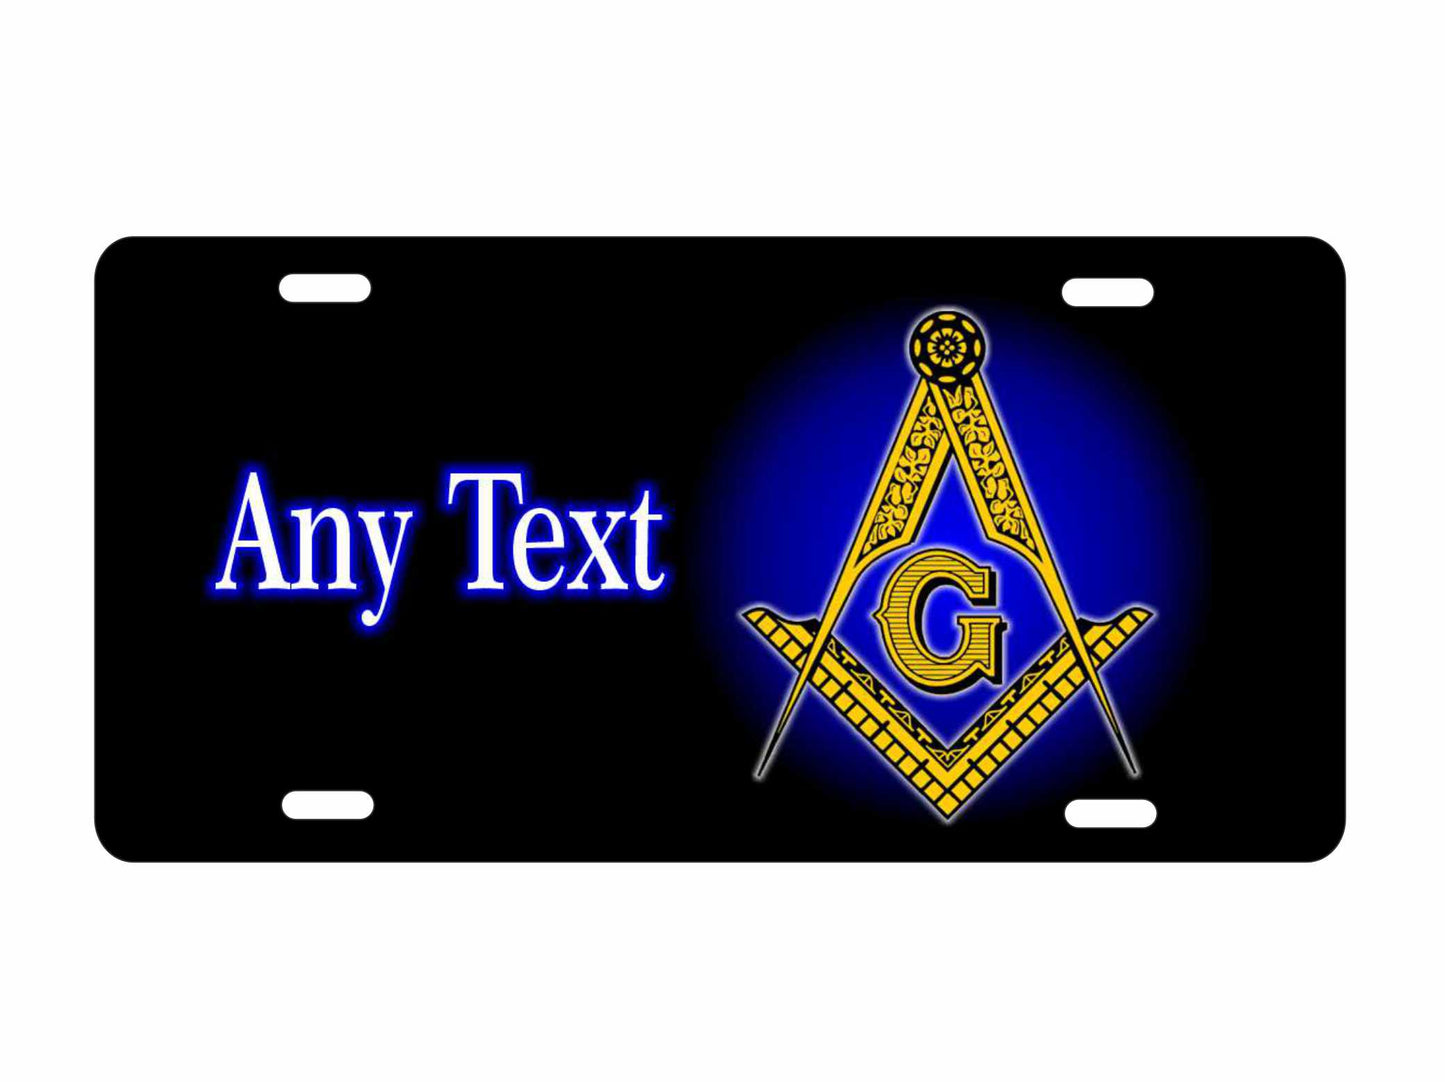 Freemason Masonic logo mason personalized novelty license plate decorative front vanity car tag